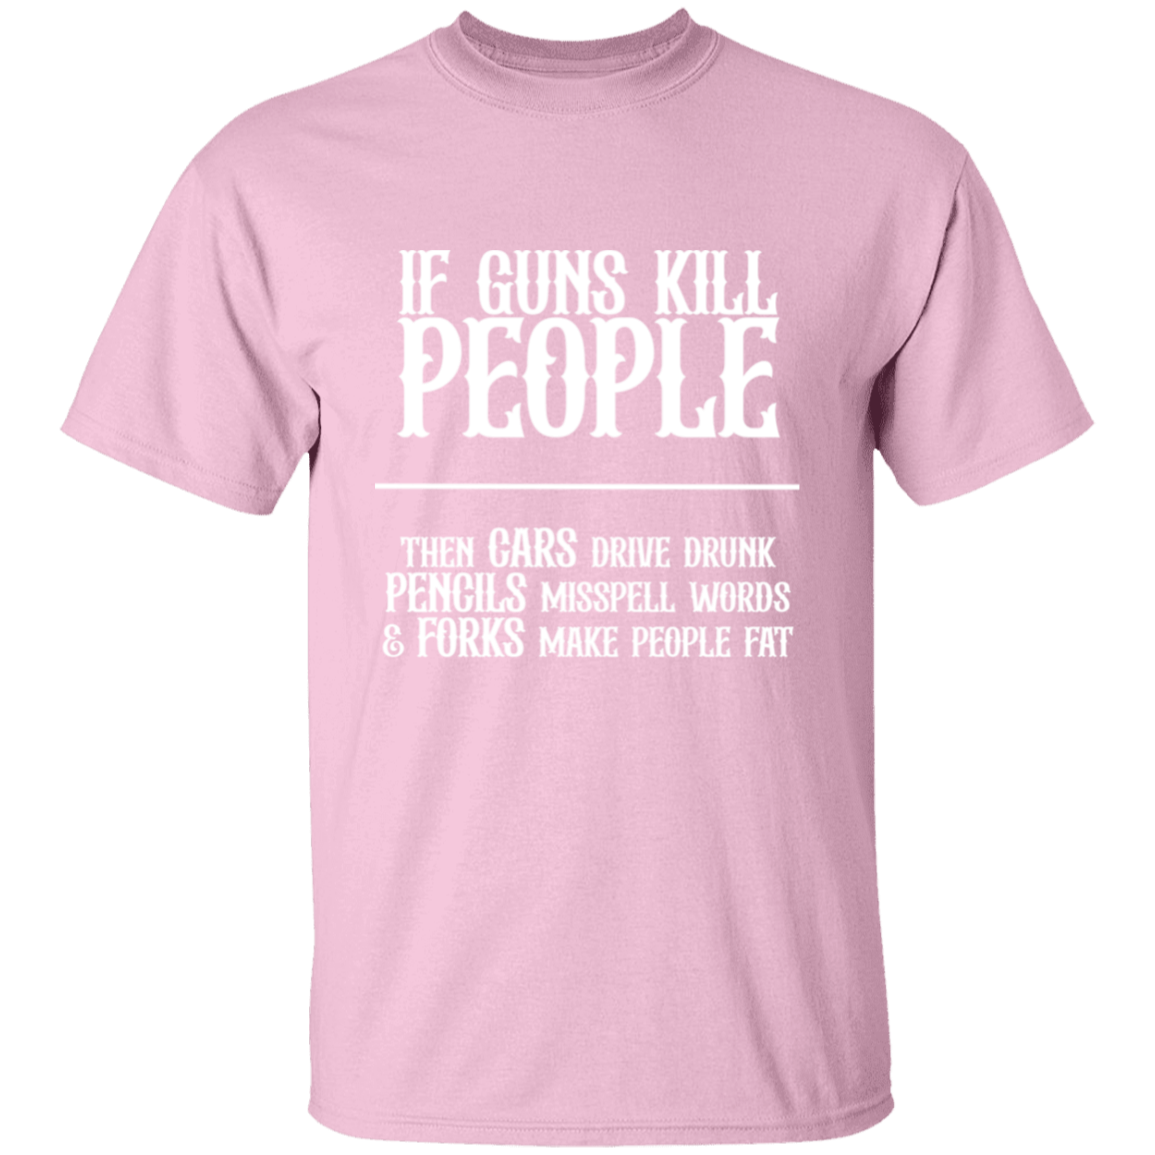 30% OFF! IF GUNS KILL PEOPLE TEE